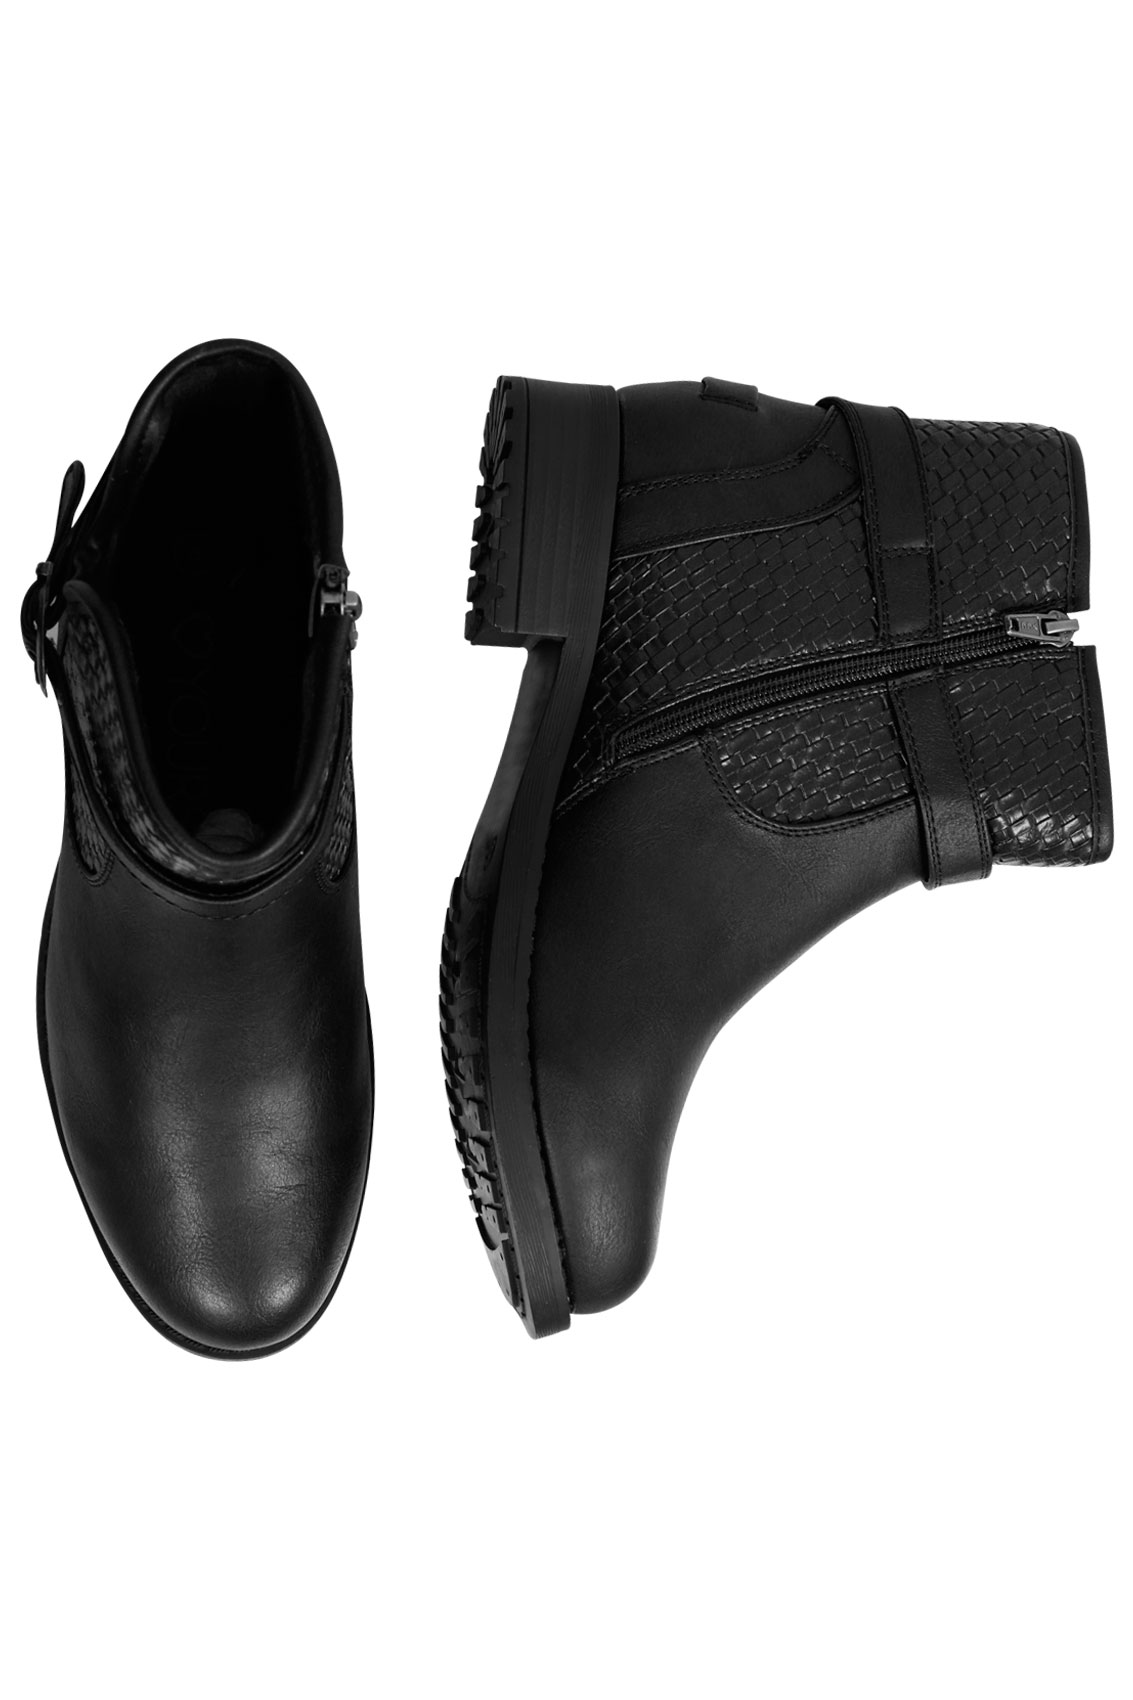 Black Whipstitch Ankle Boot In EEE Fit, Size 4EEE,5EEE,6EEE,7EEE,8EEE ...